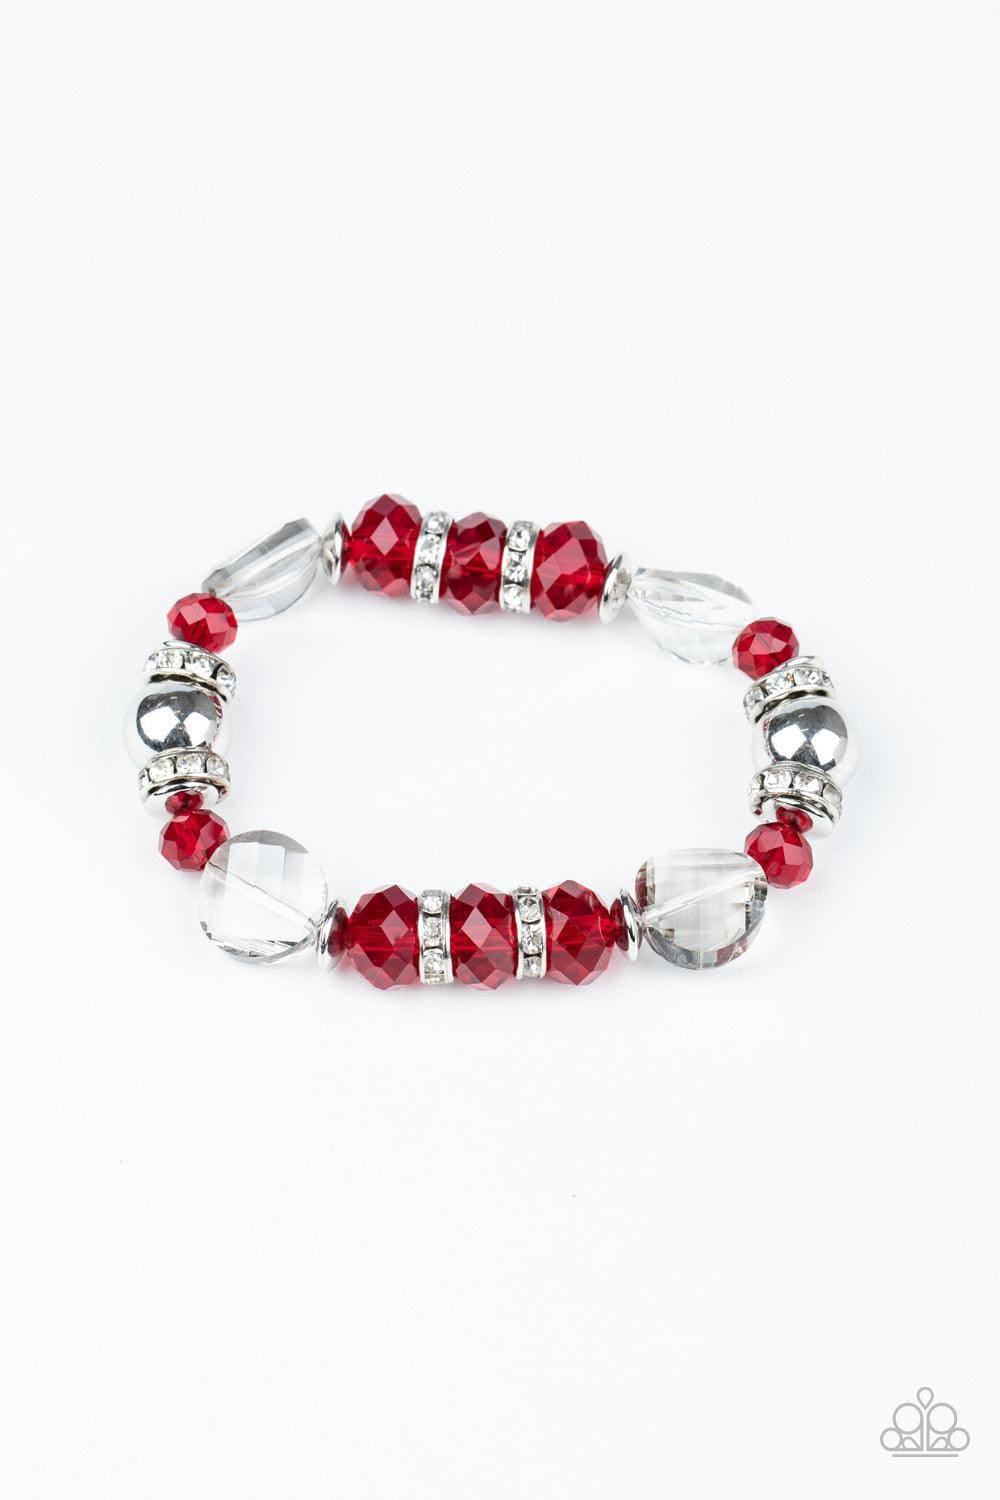 Paparazzi Accessories - Treat Yourself - Red Bracelet - Bling by JessieK